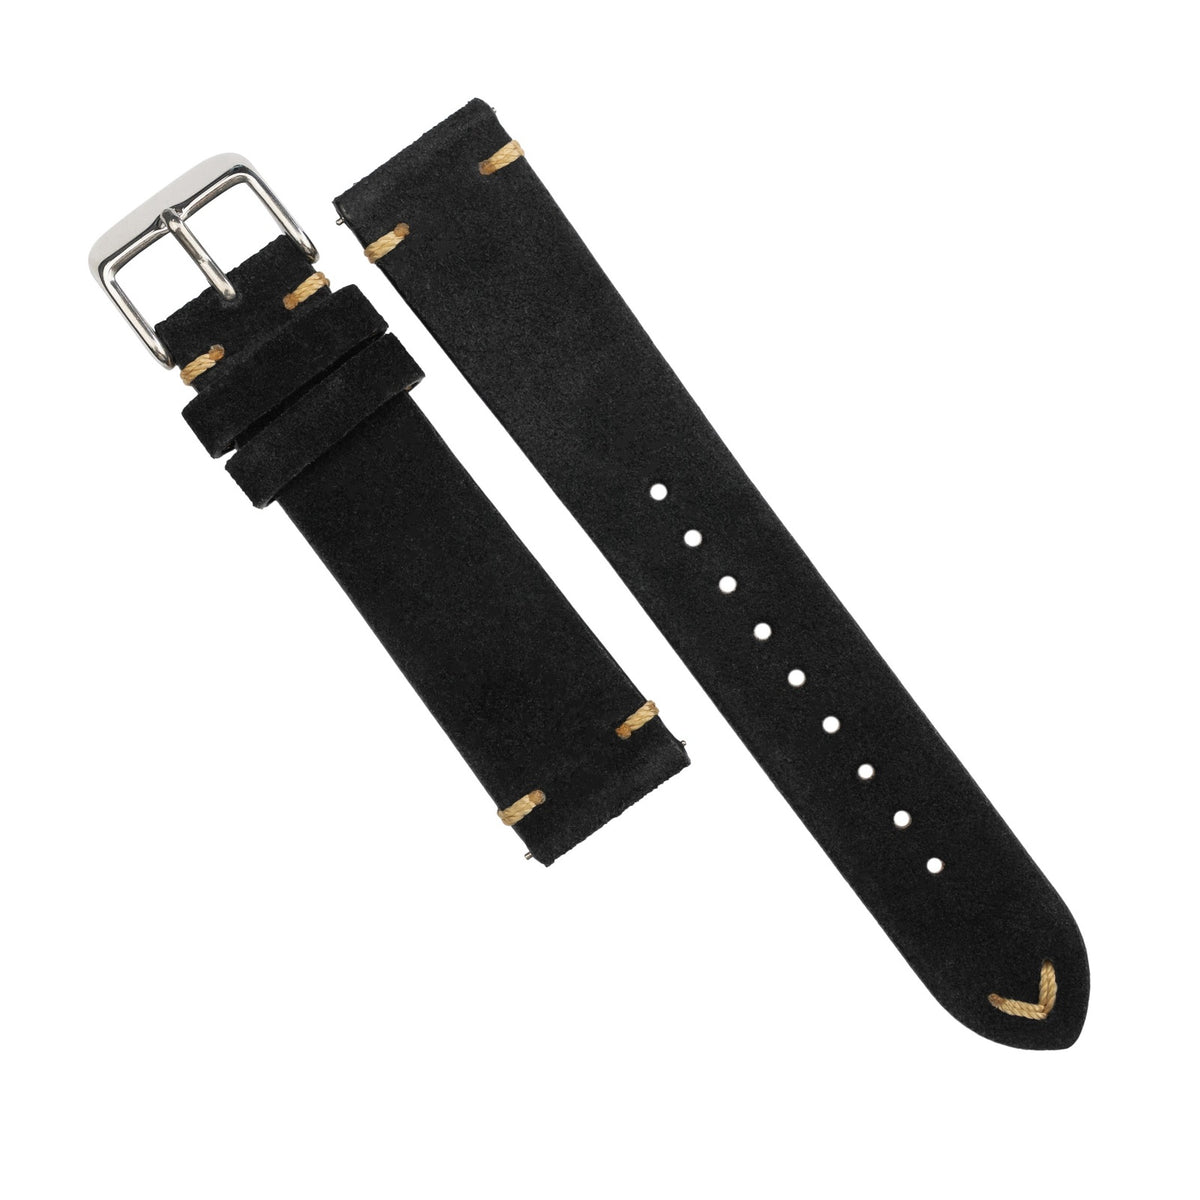 Premium Vintage Suede Leather Watch Strap in Black (18mm) - Nomad Watch Works MY